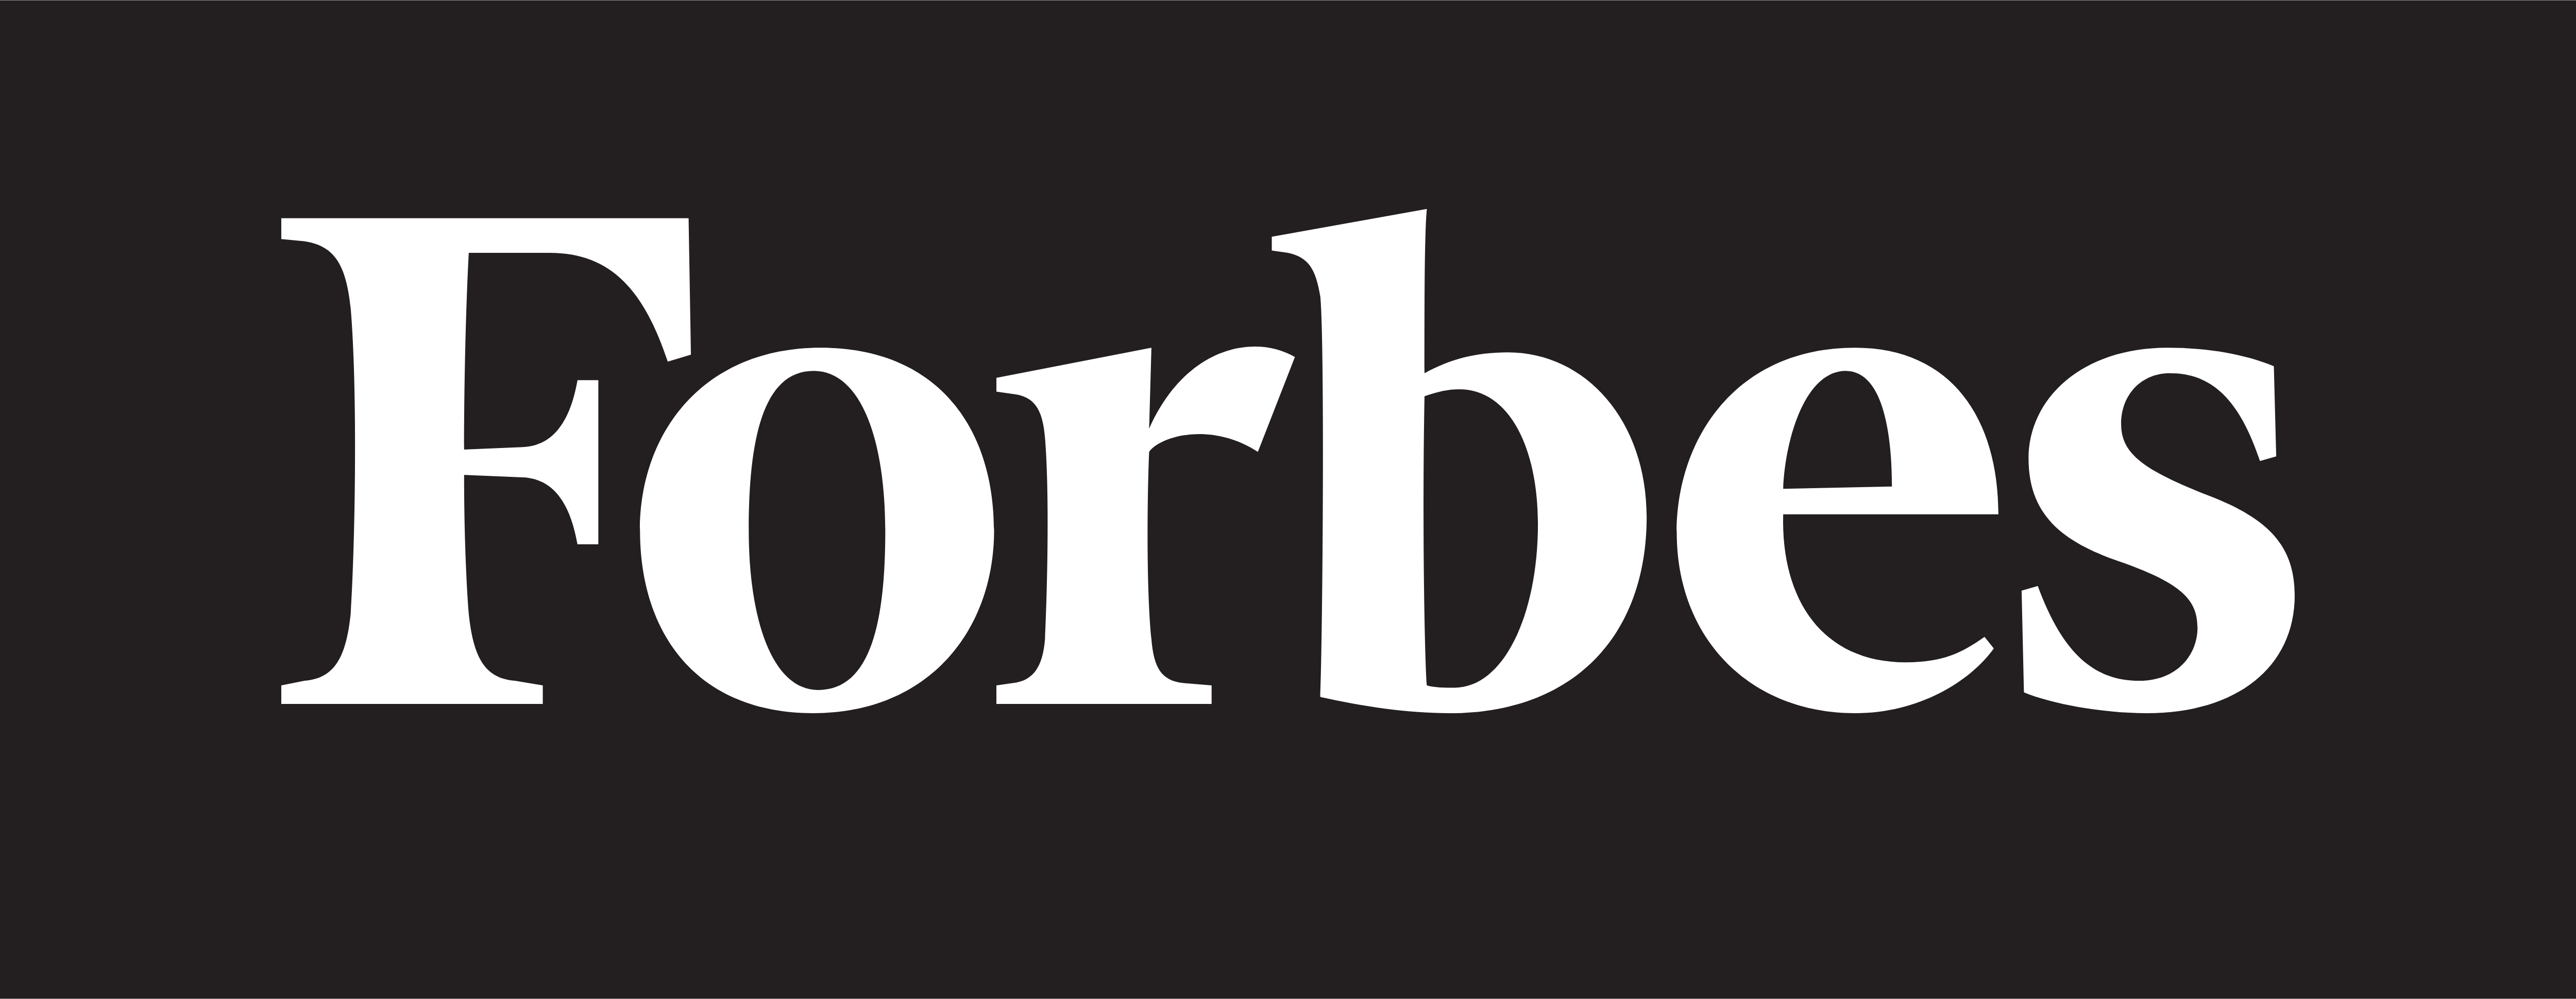 Forbes – Logo's downloaden